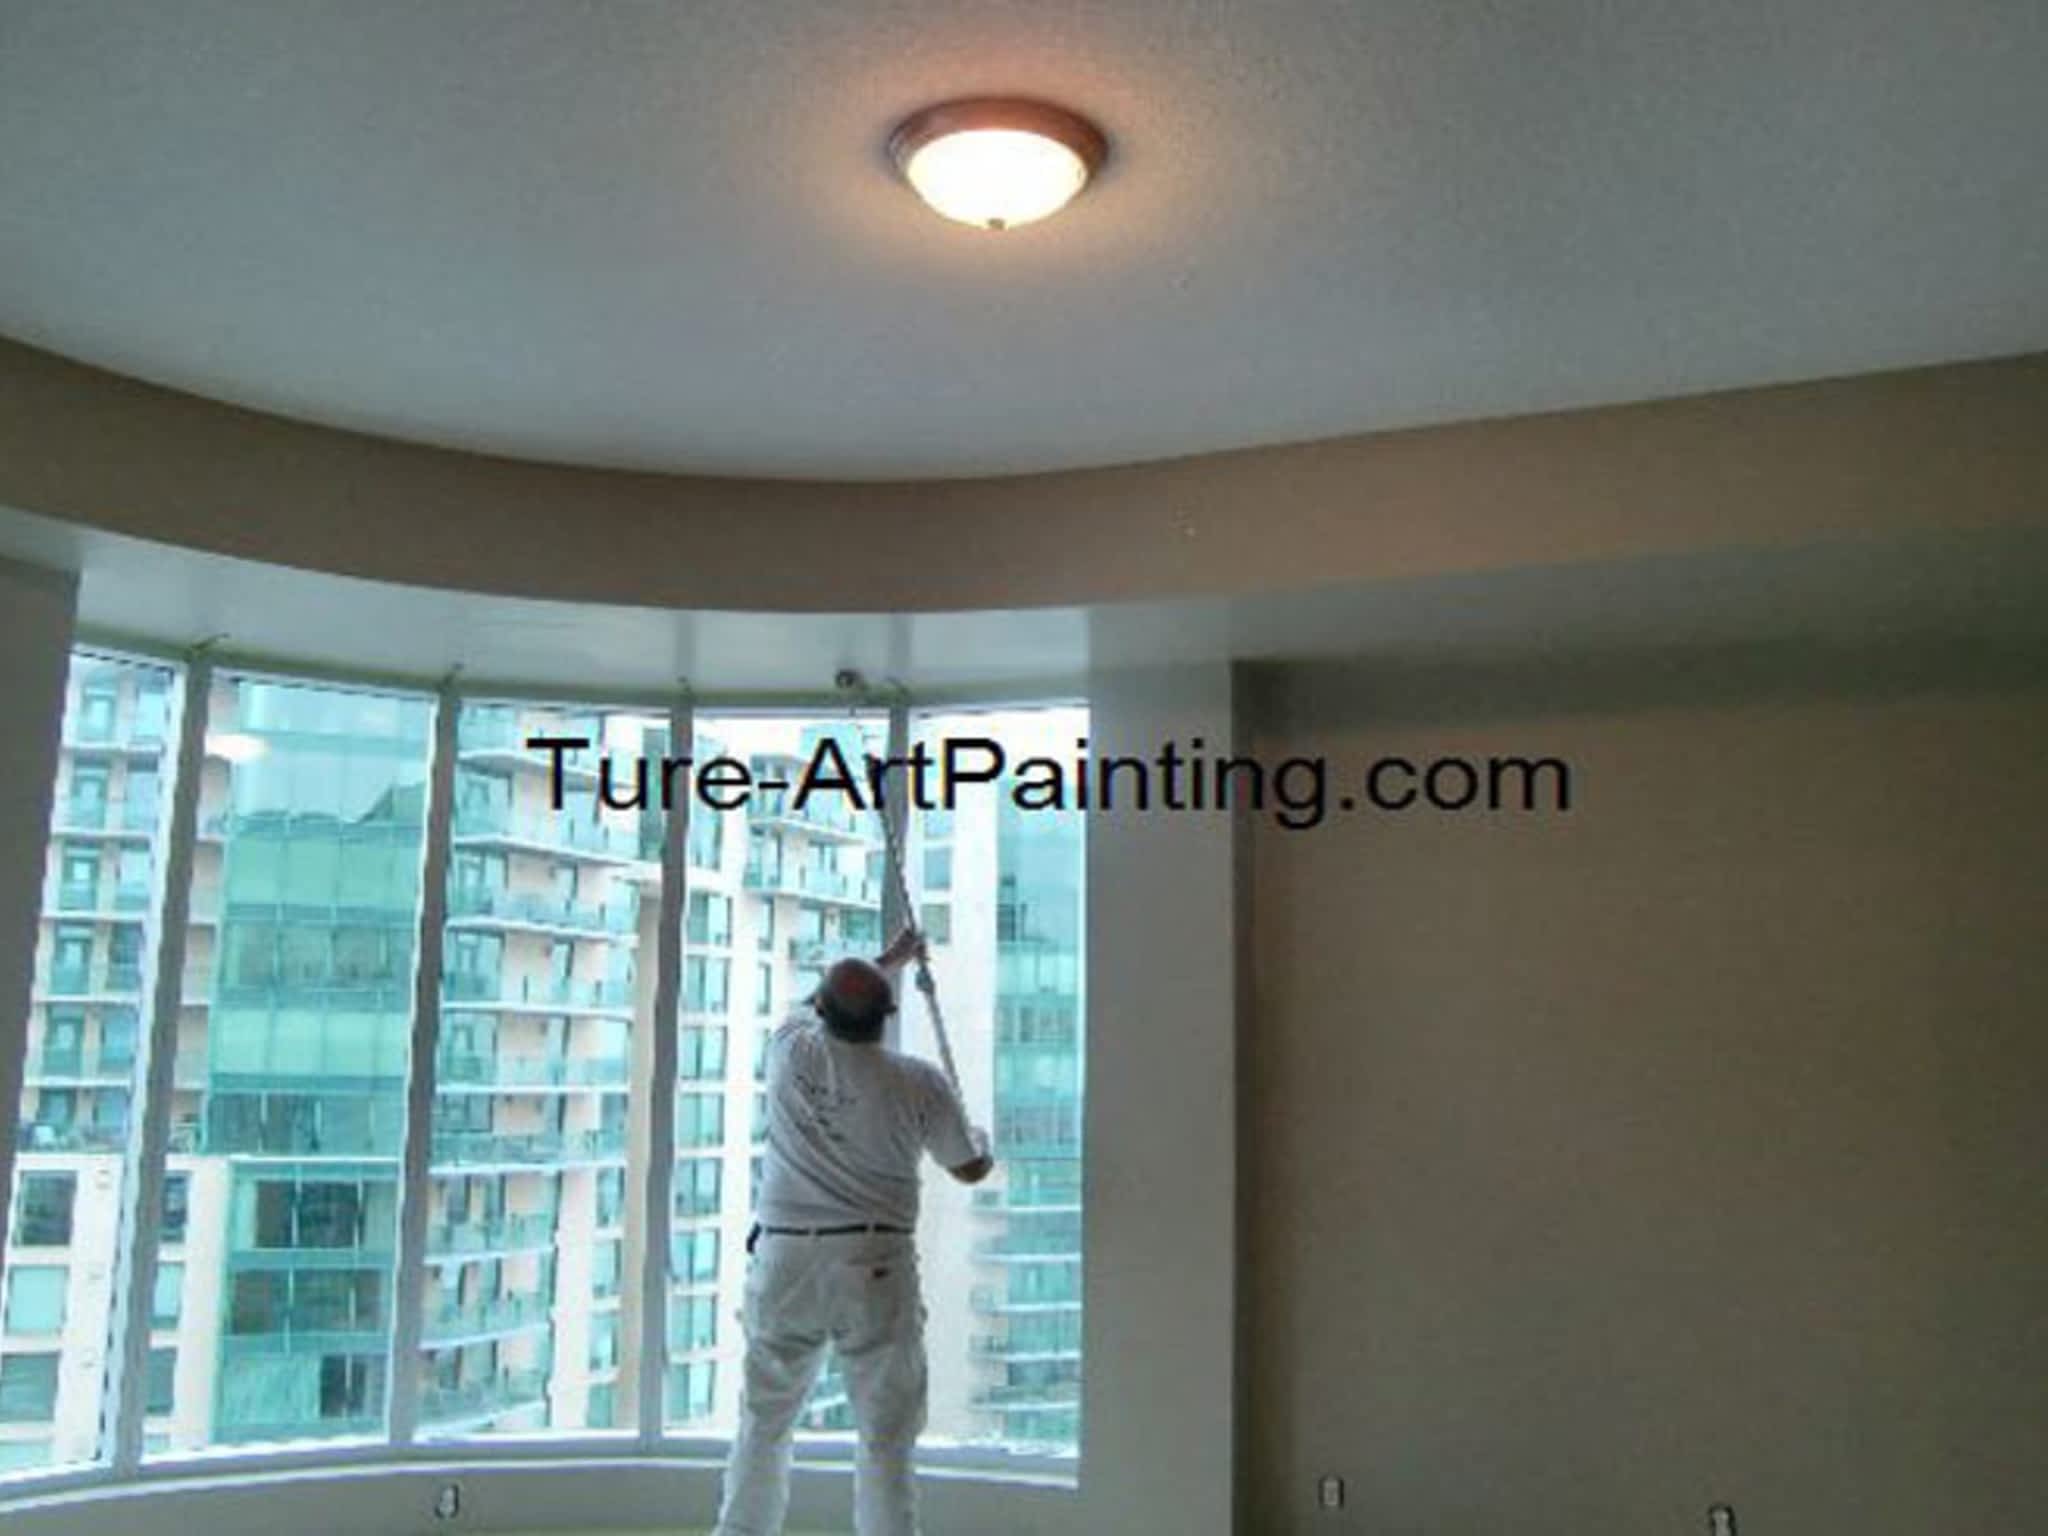 photo Ture Art Painting Ltd